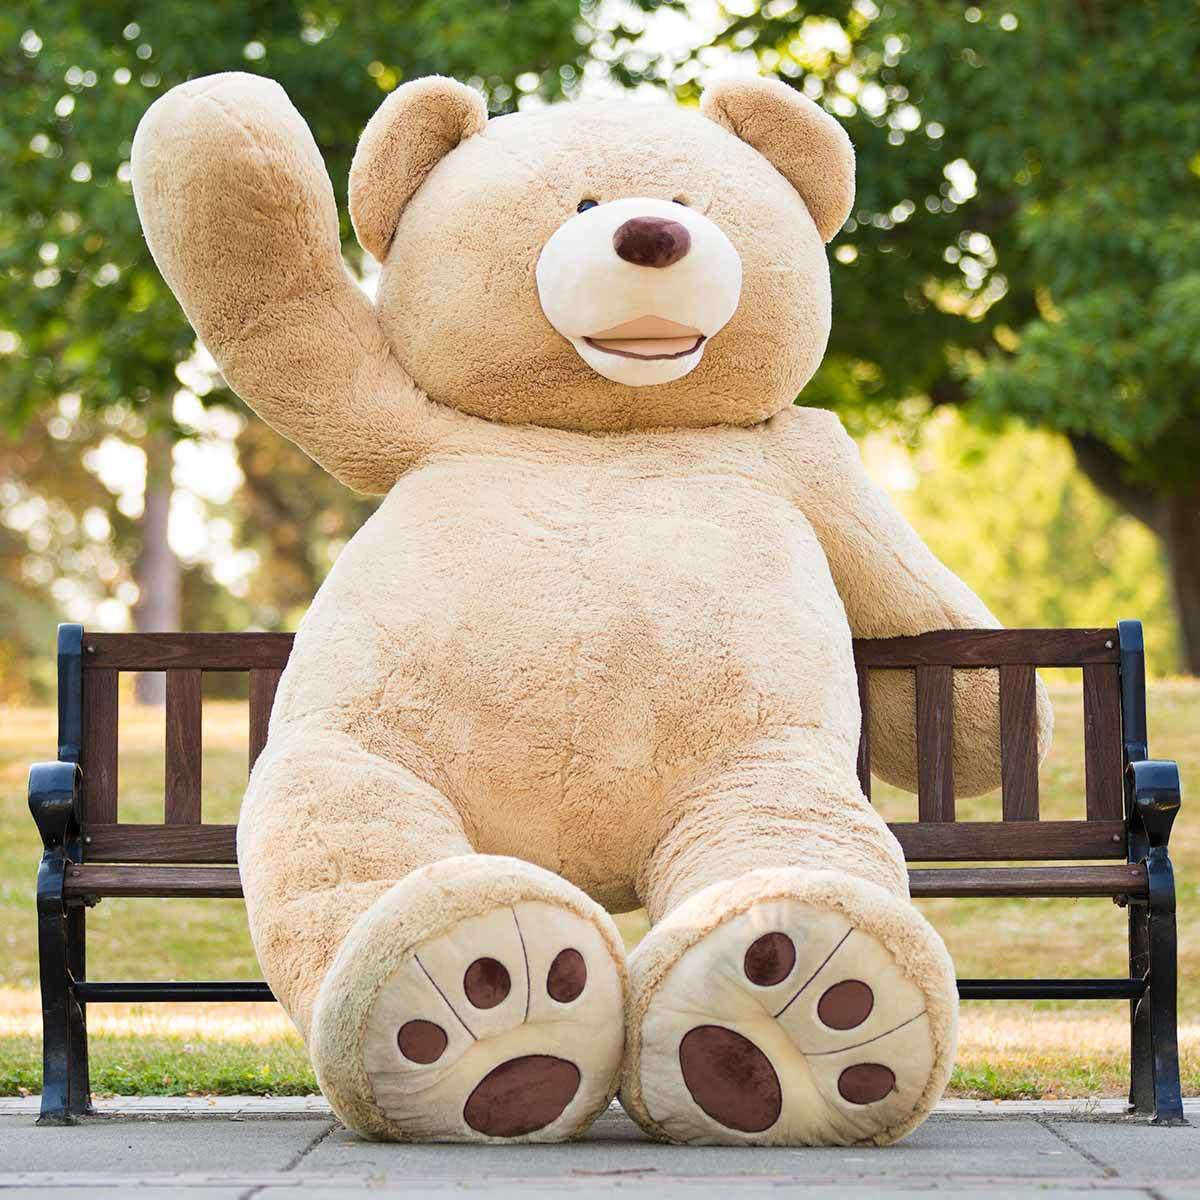 3 ft teddy bear price